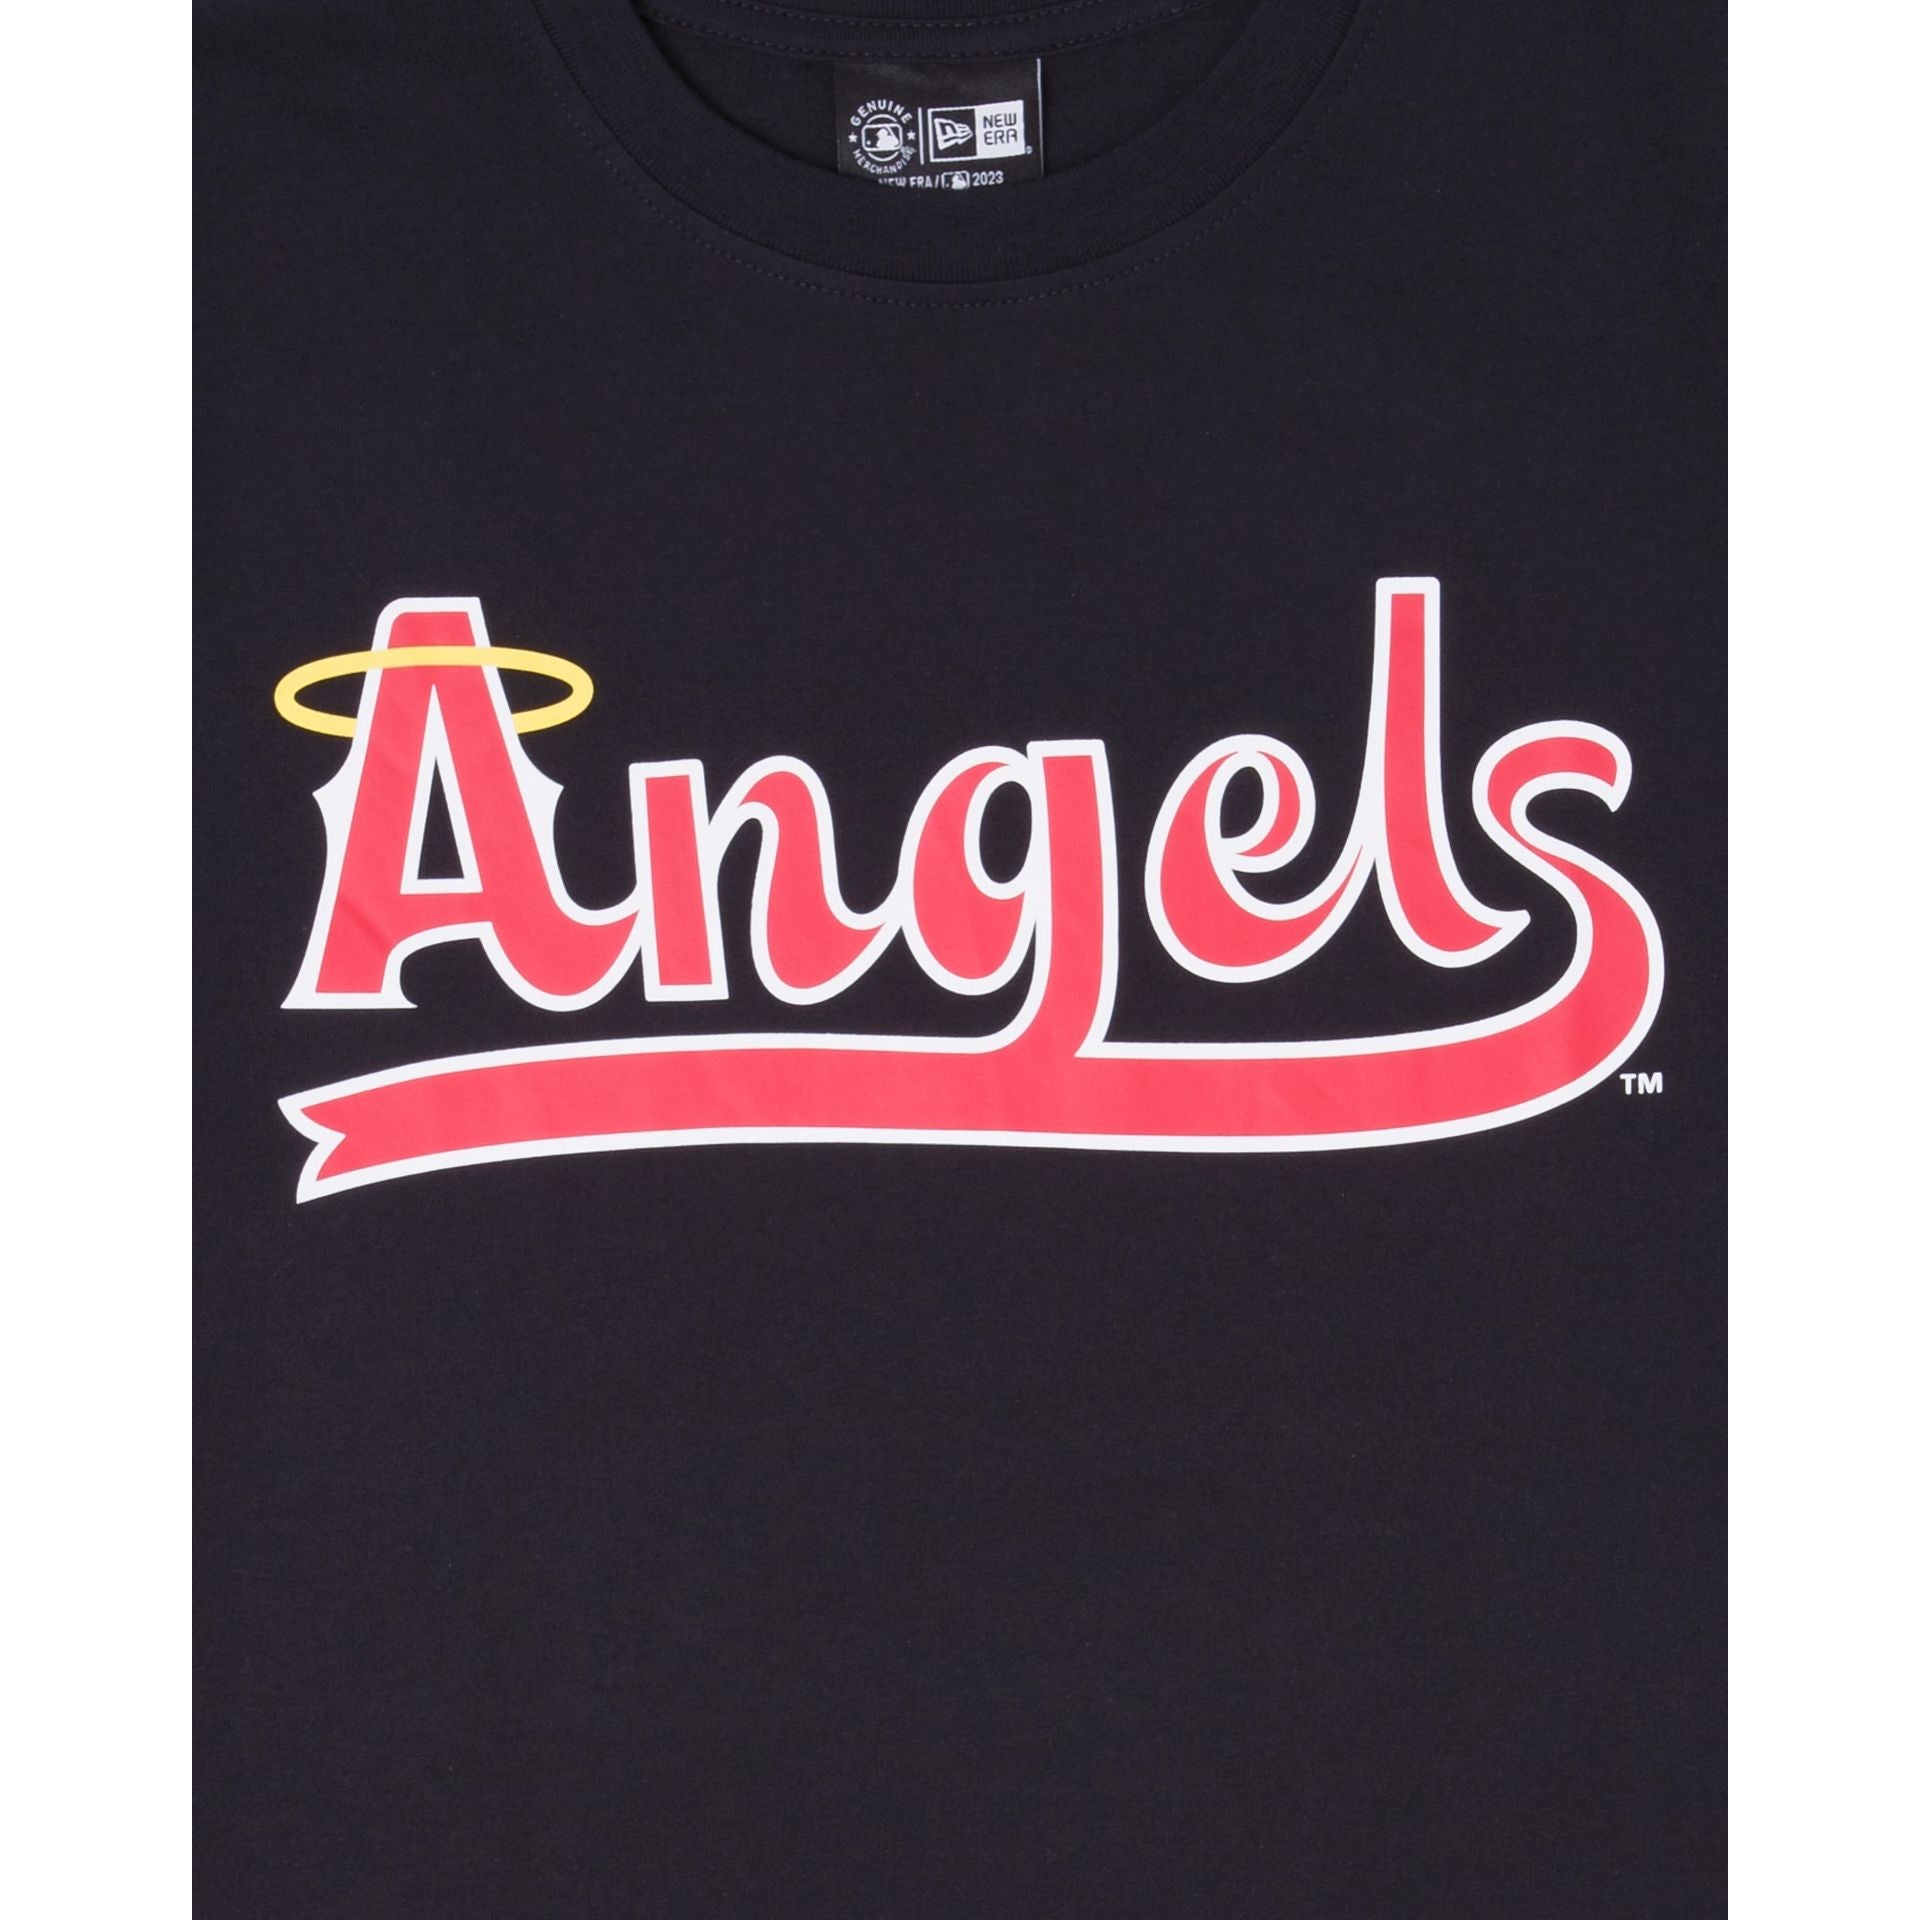 Los Angeles Angels Retro City T-Shirt